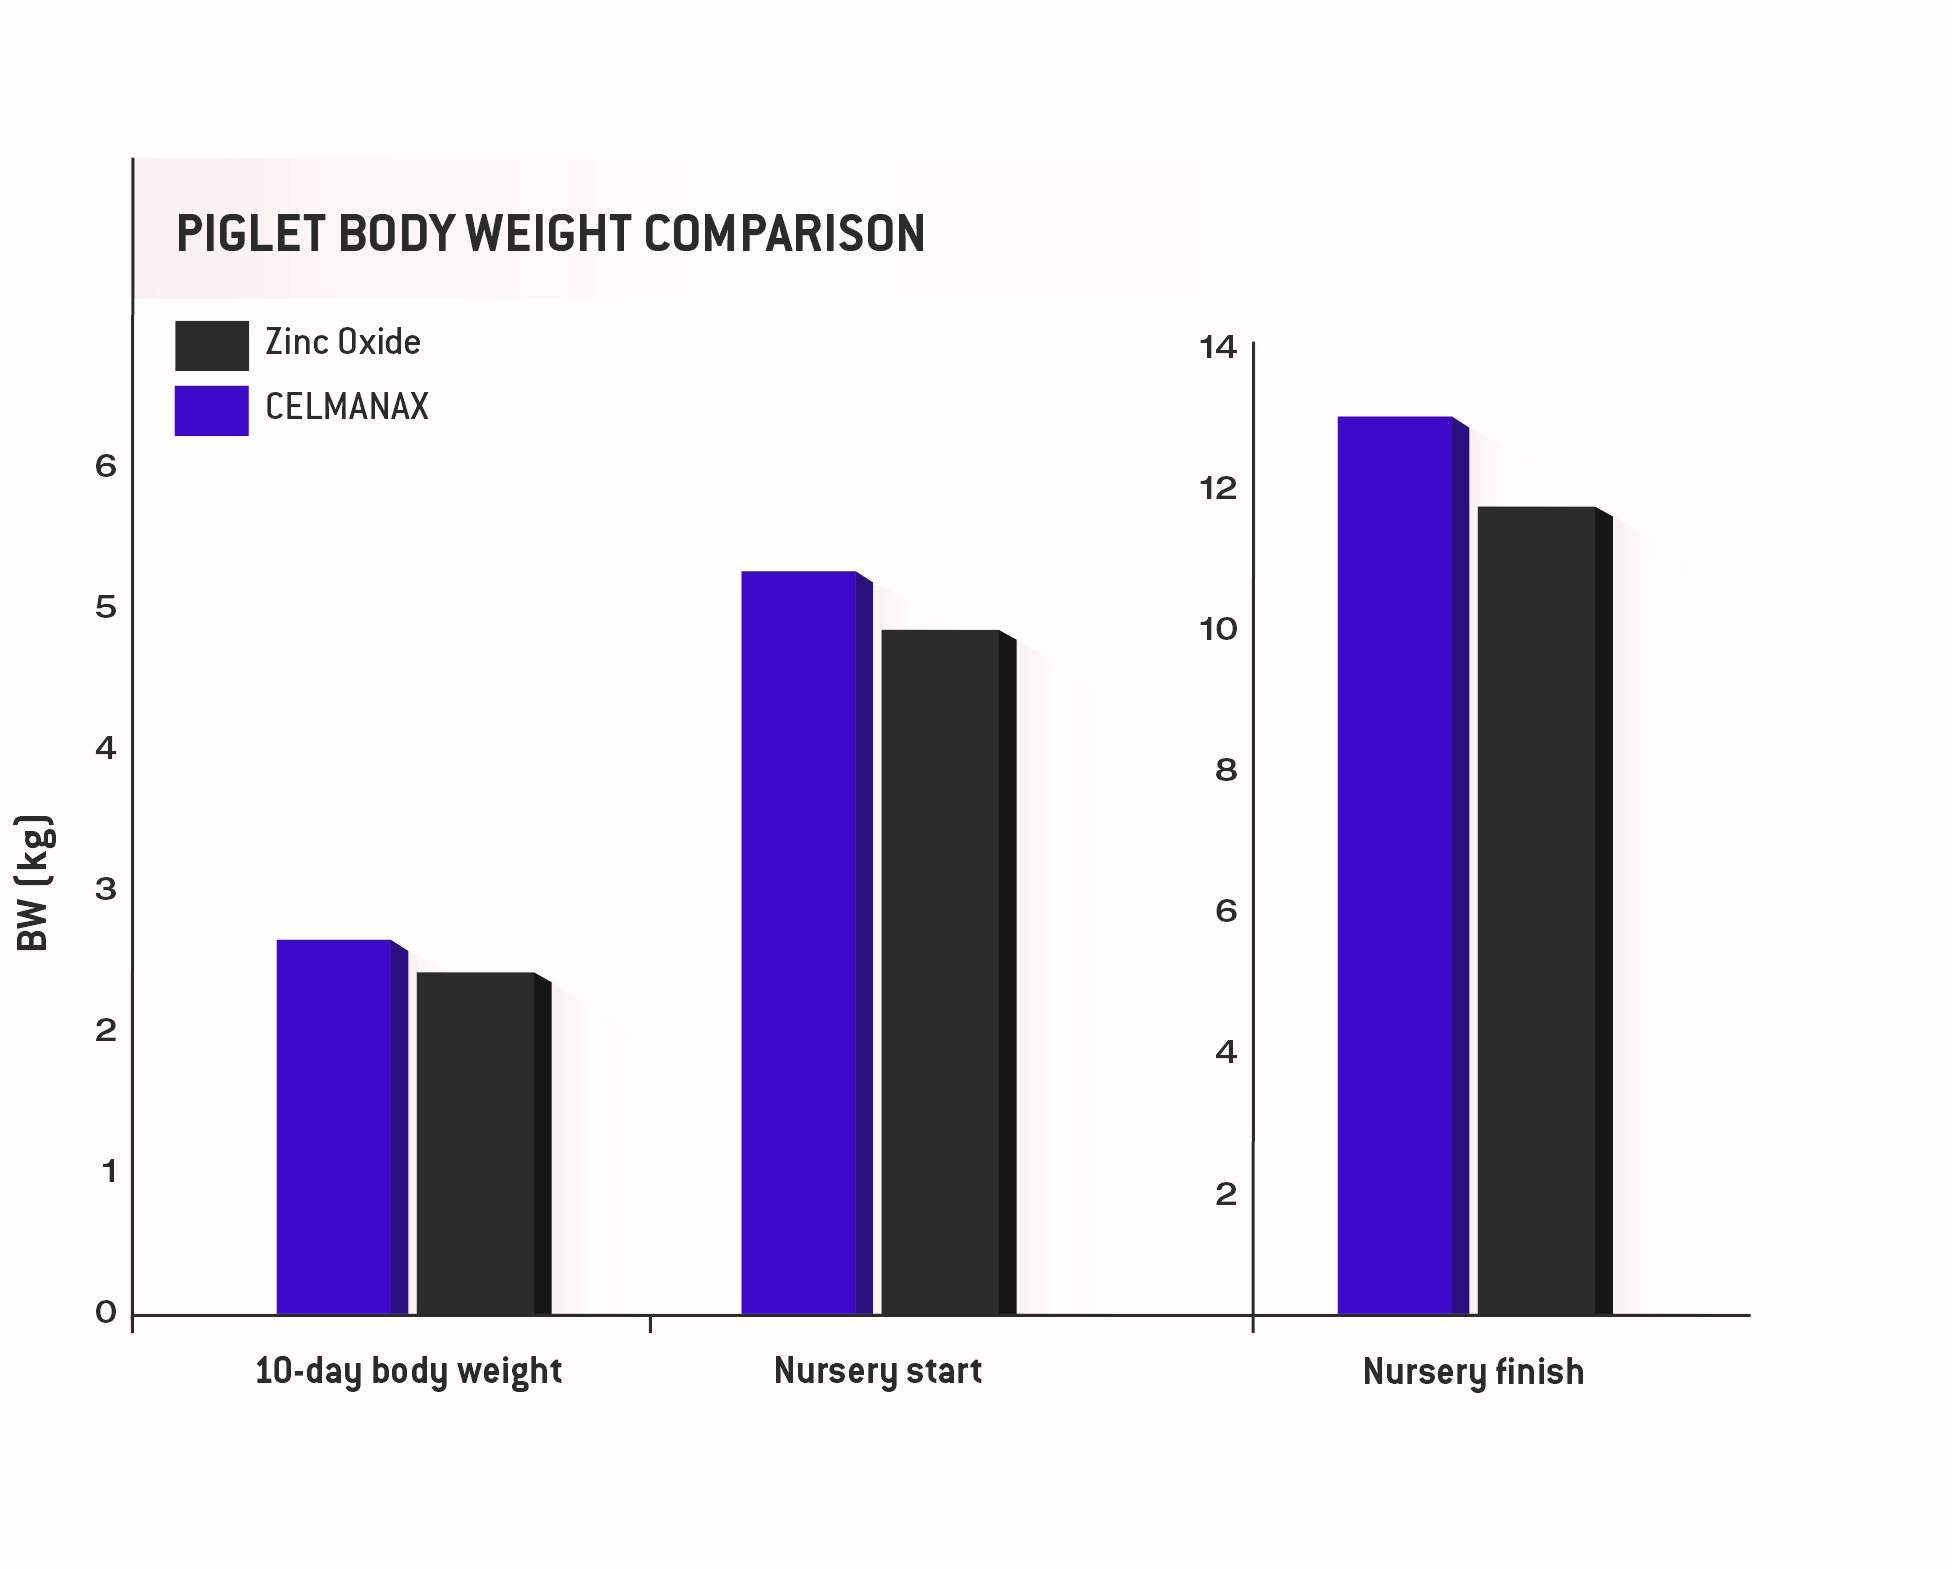 Piglet body weight comparison chart